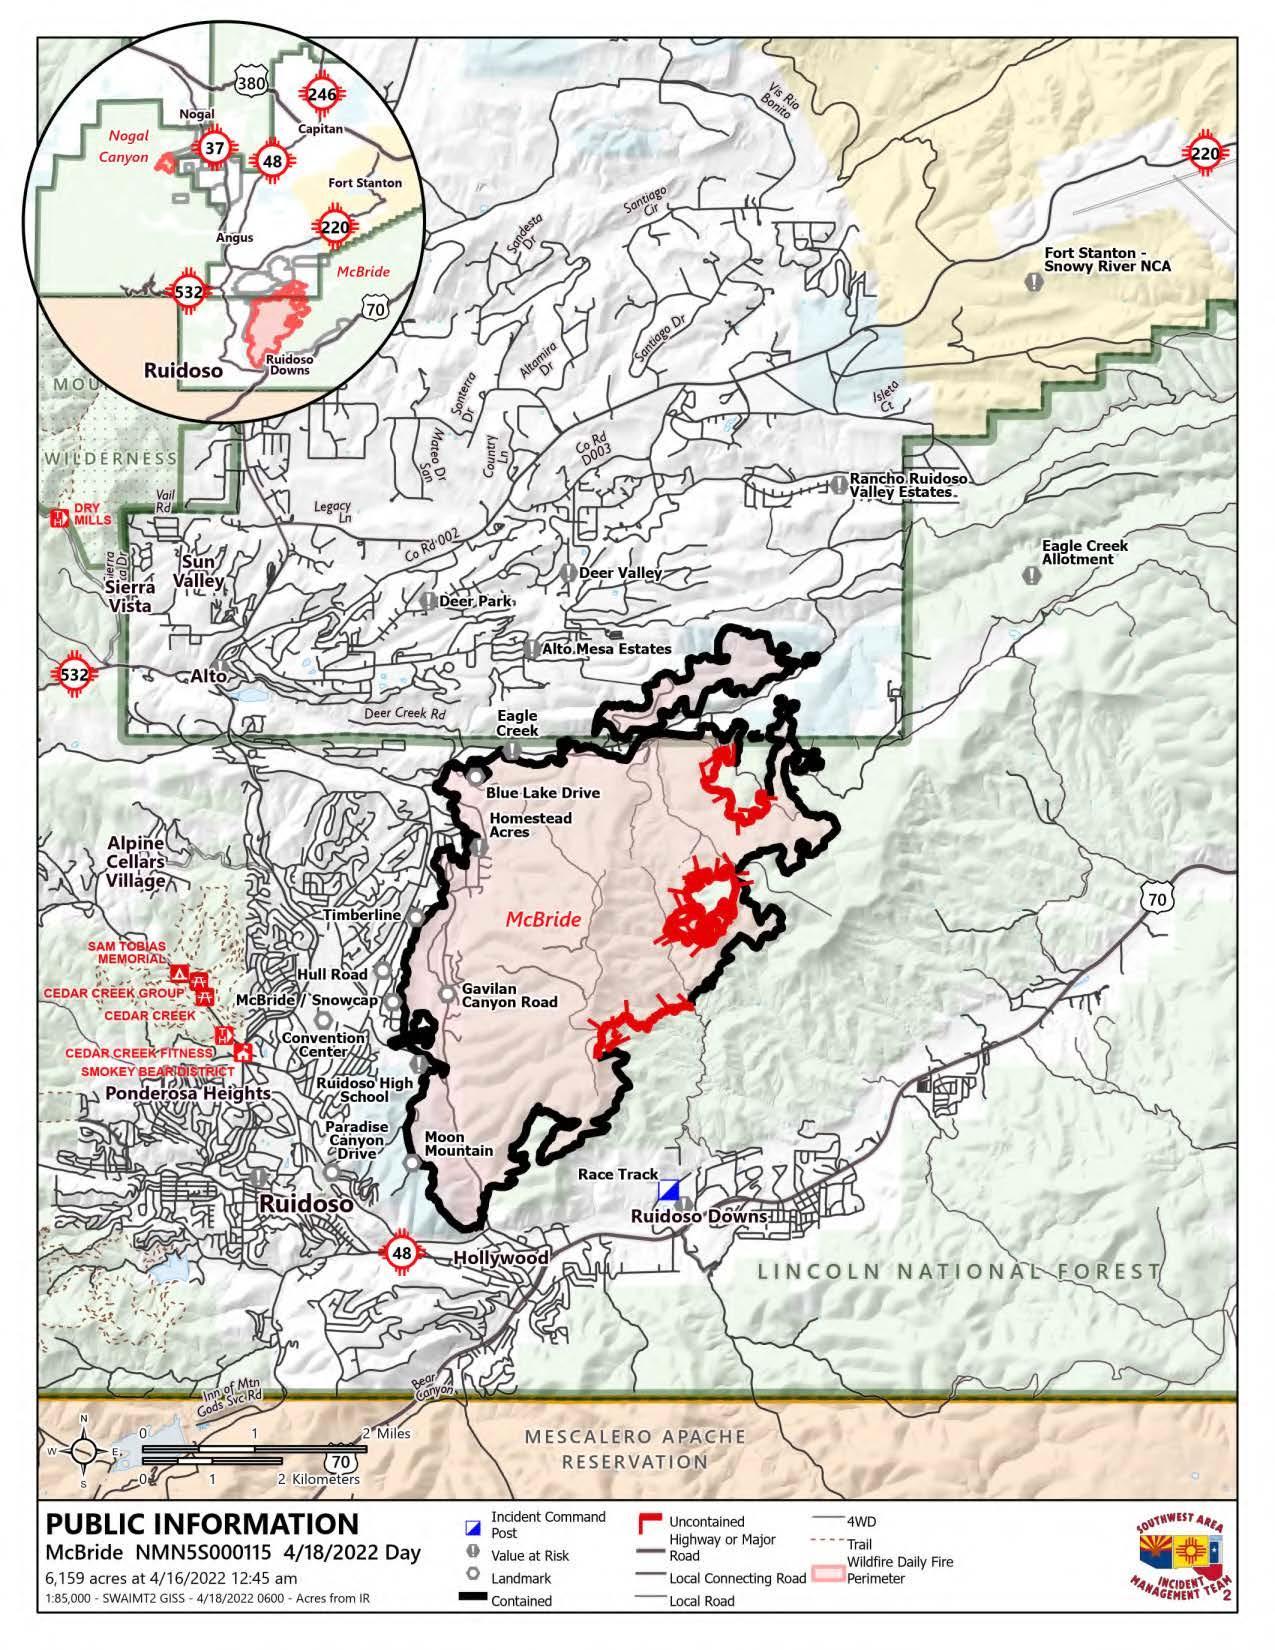 McBride Fire Map April 18, 2022